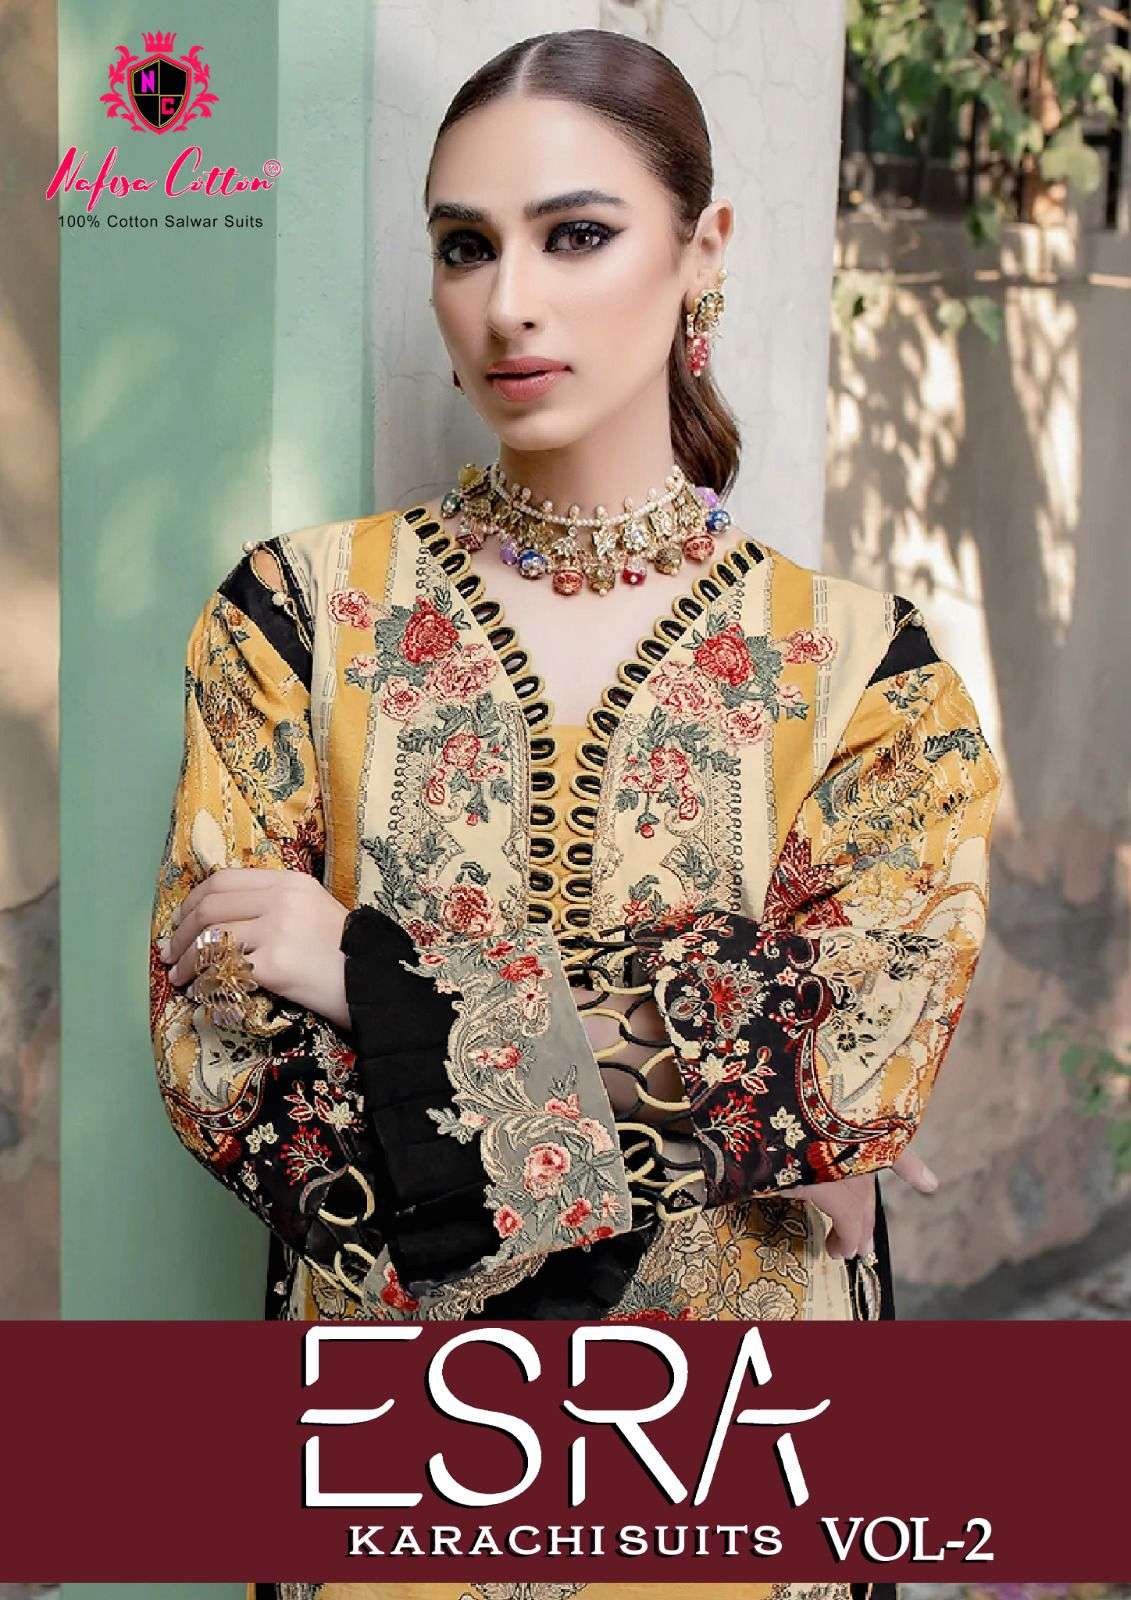 nafisa cotton esra vol-2 2001-2006 series pakistani salwar suits catalogue online supplier surat